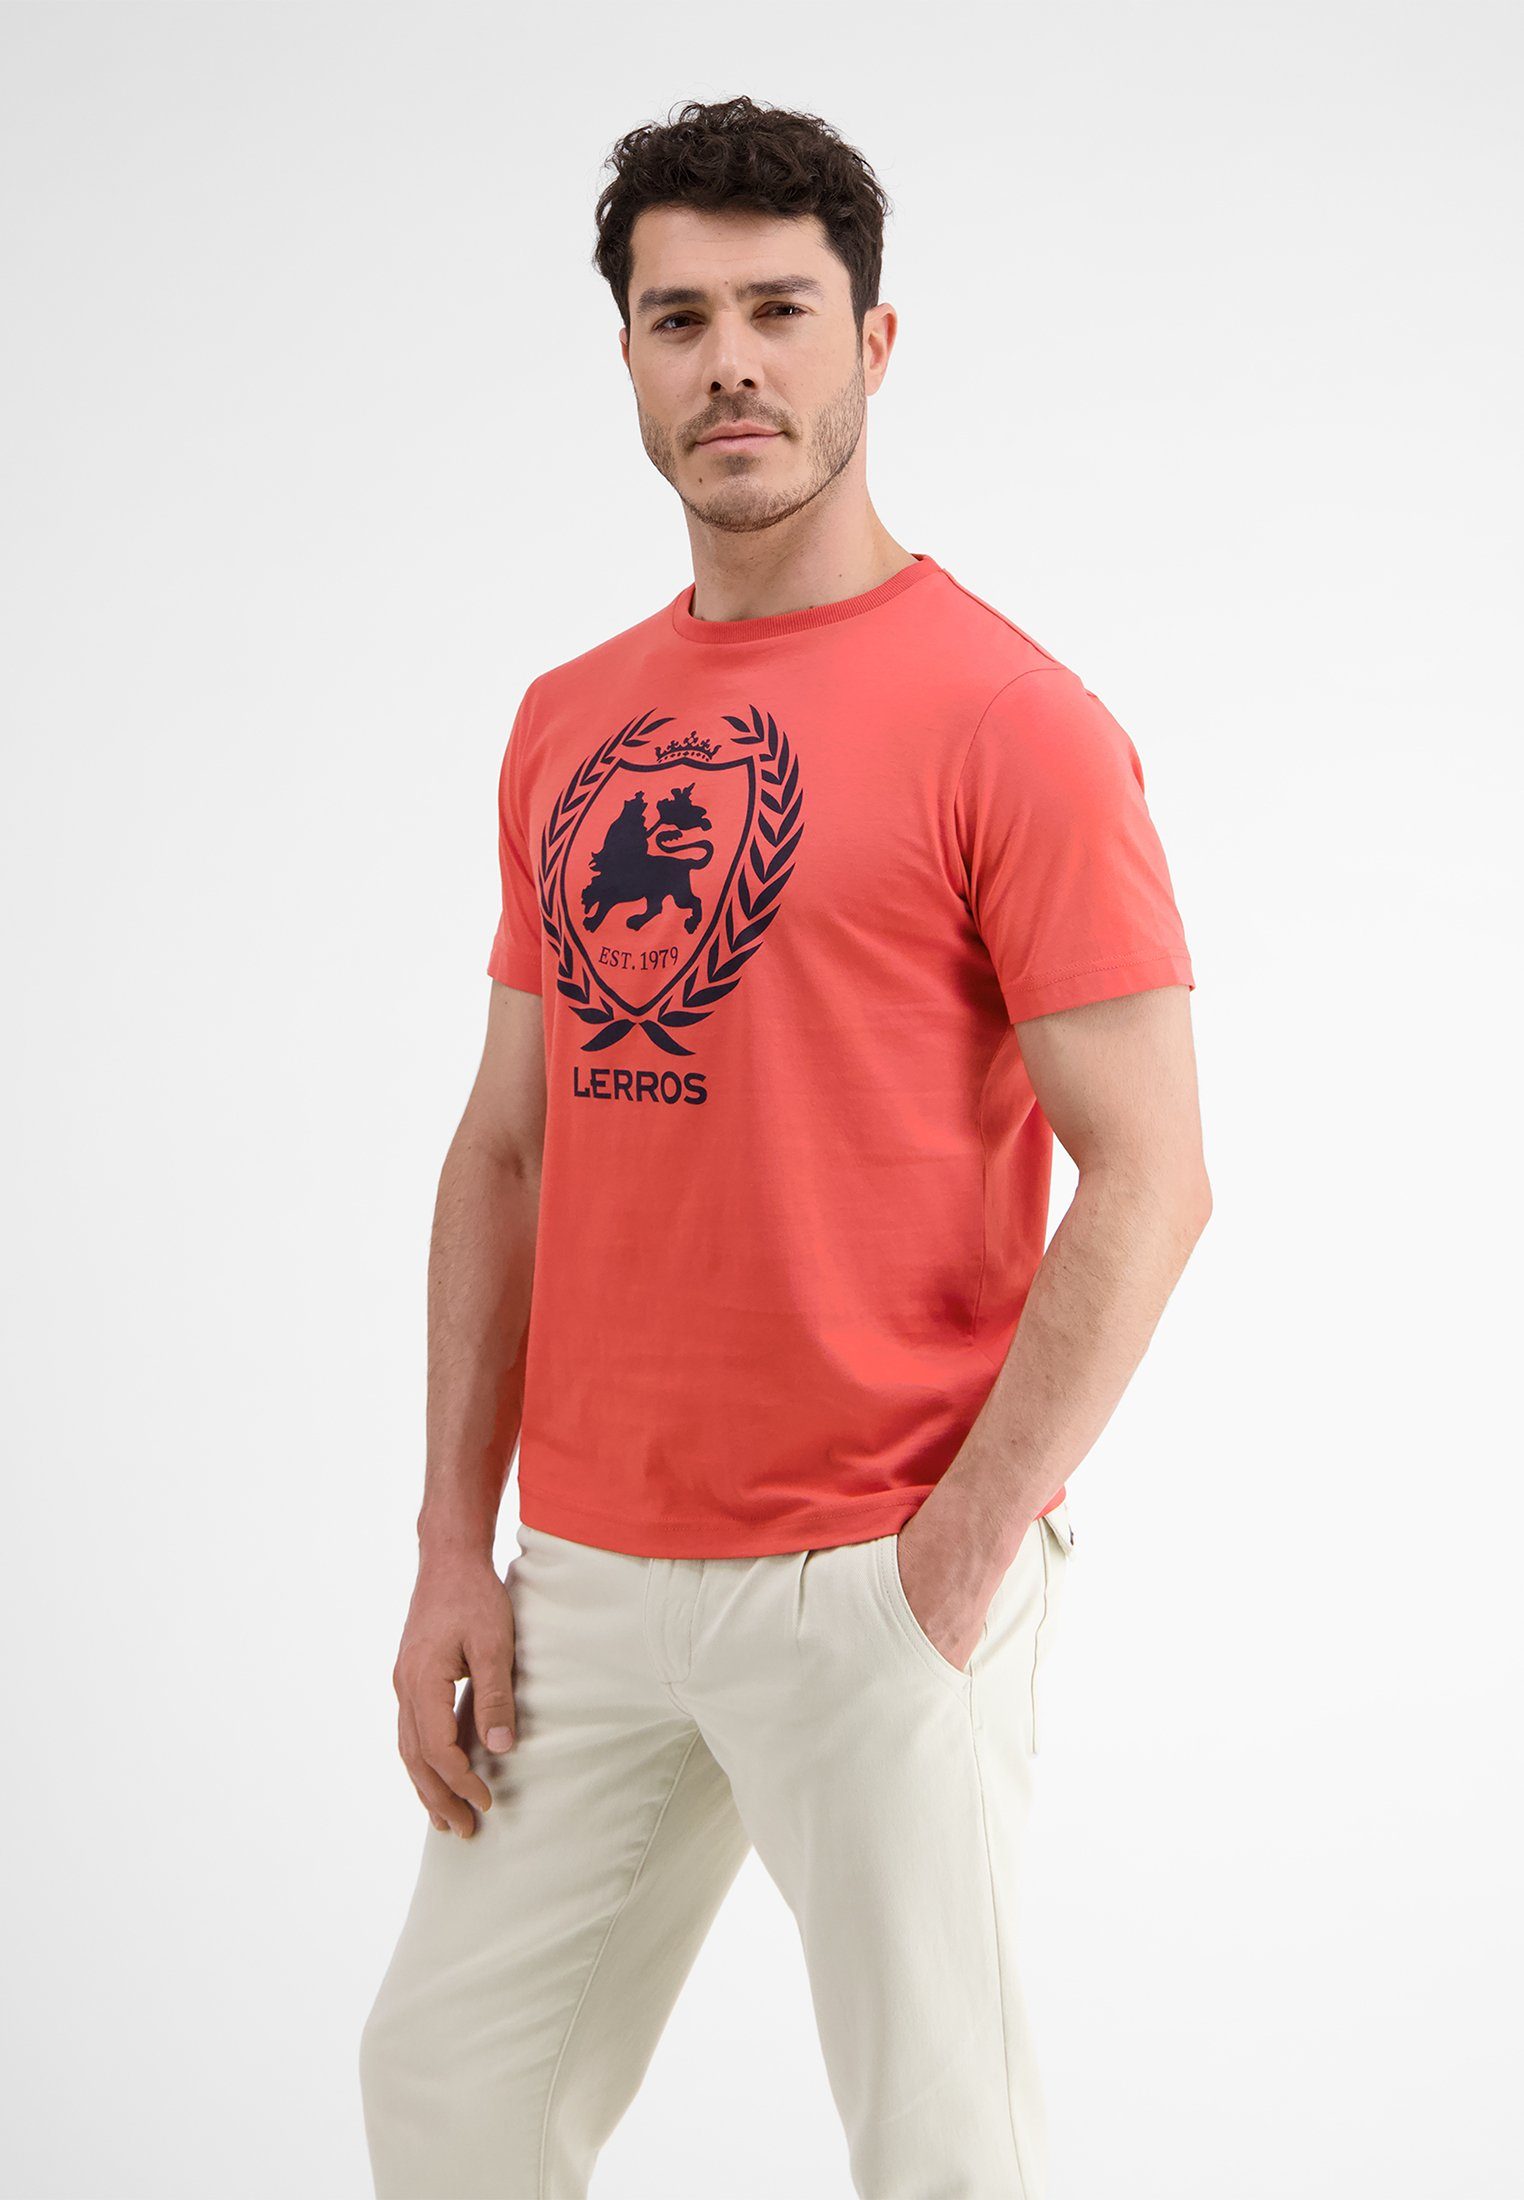 T-Shirt HIBISCUS RED Logoprint LERROS T-Shirt, LERROS